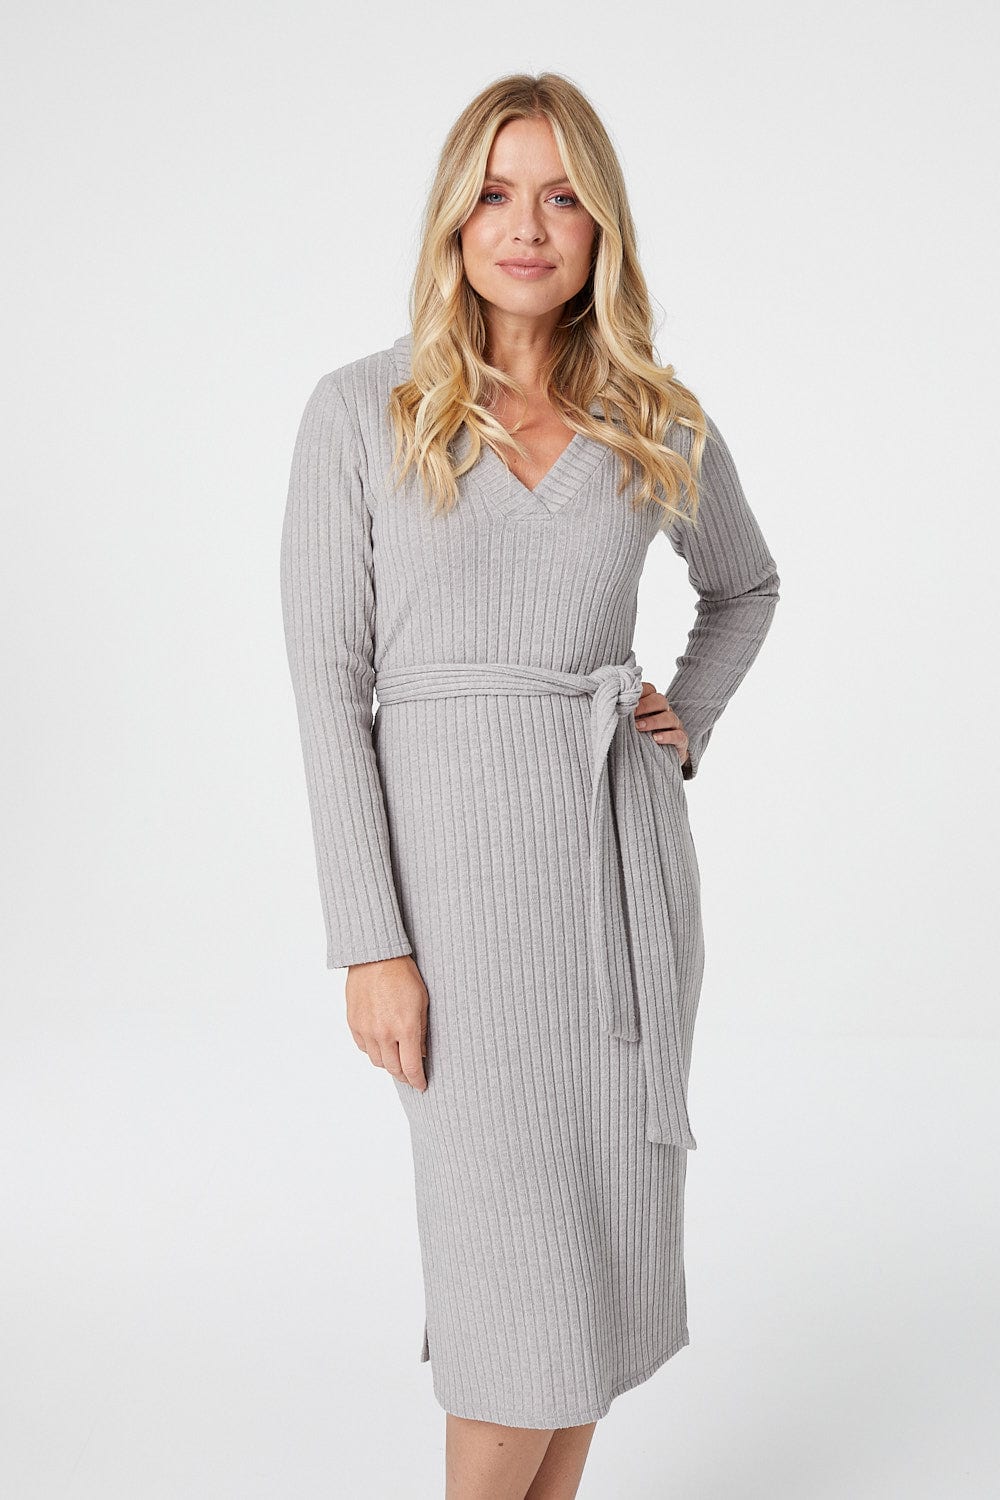 Grey | Polo Collar Knit Dress